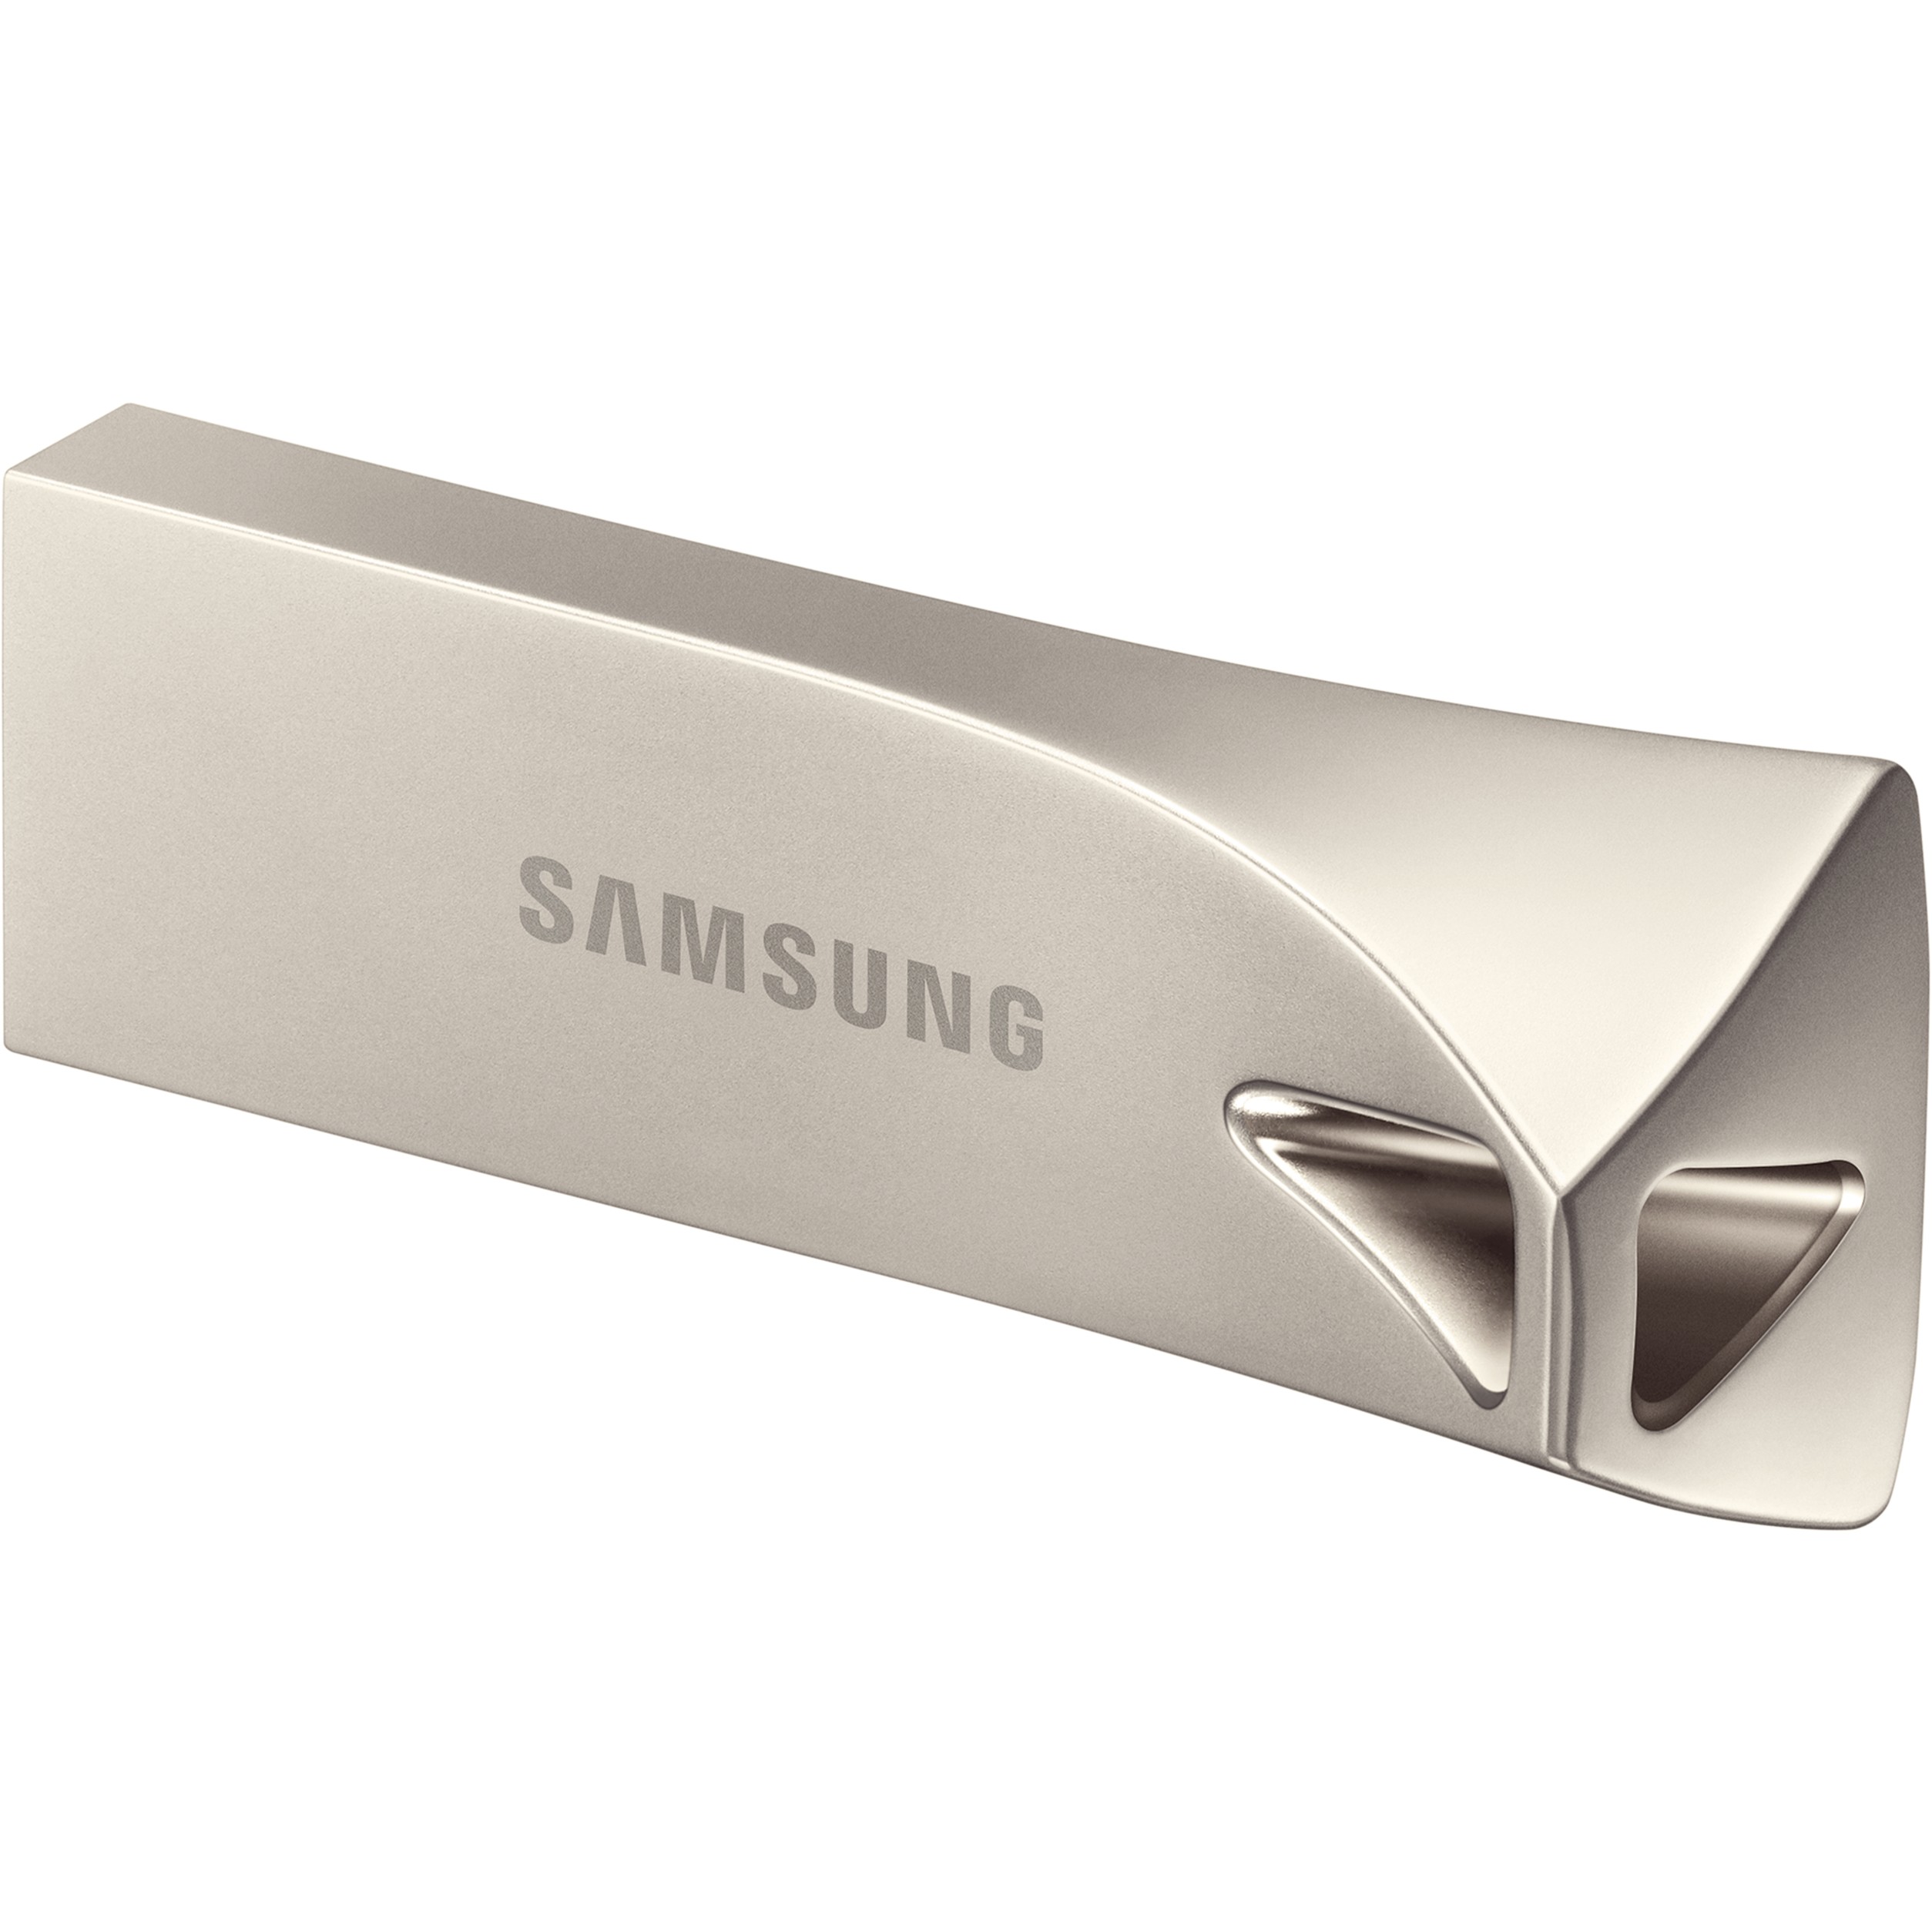 SAMSUNG MUF-128BE3/APC, USB-Stick, Samsung MUF-128BE USB  (BILD3)